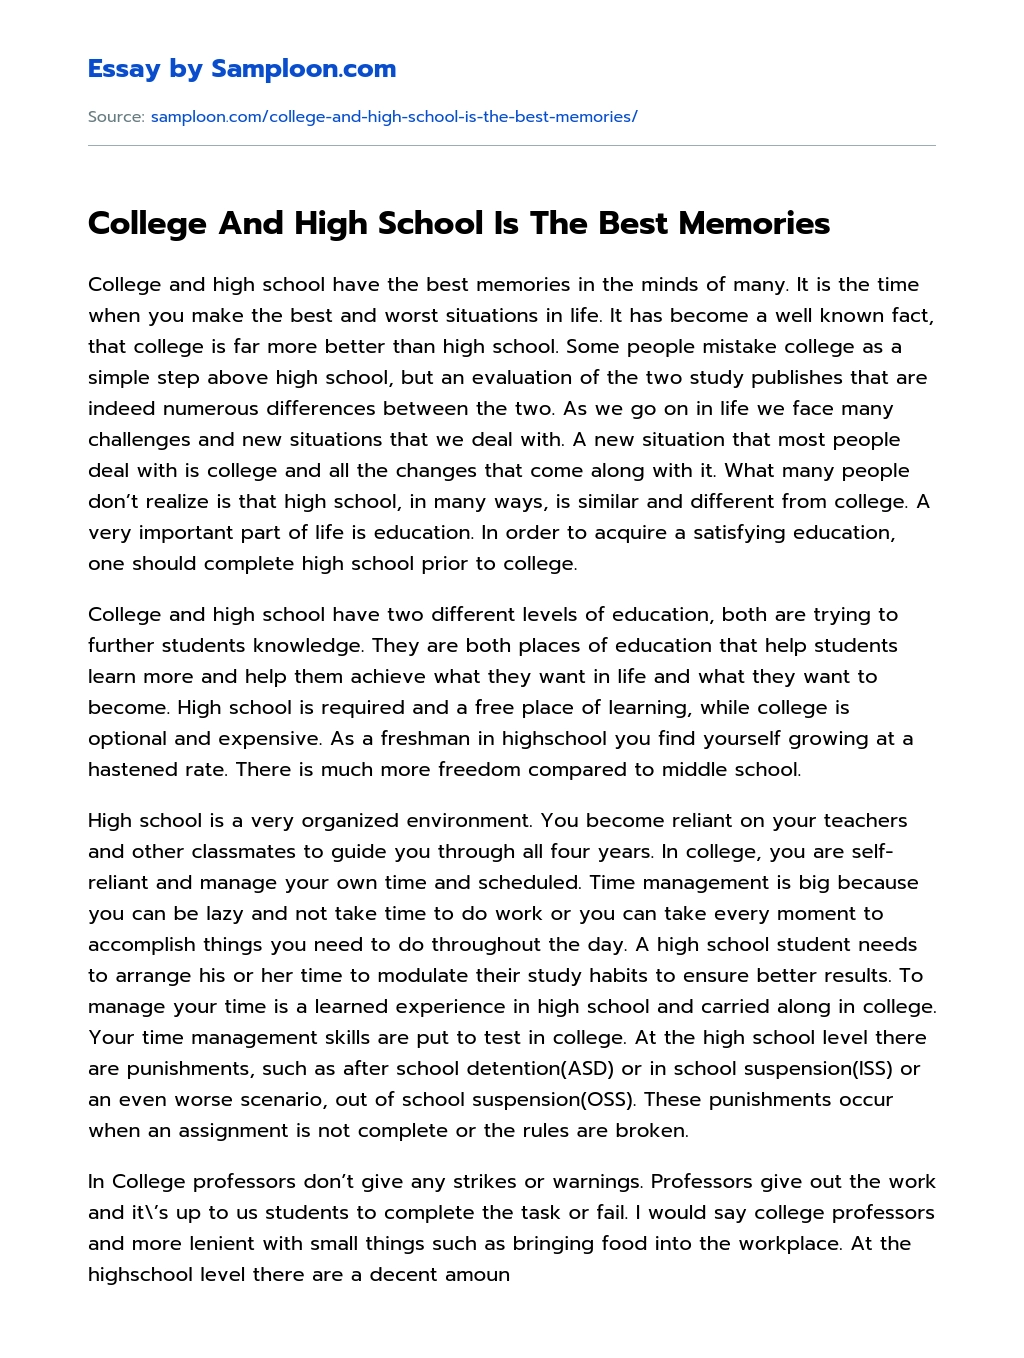 College And High School Is The Best Memories essay